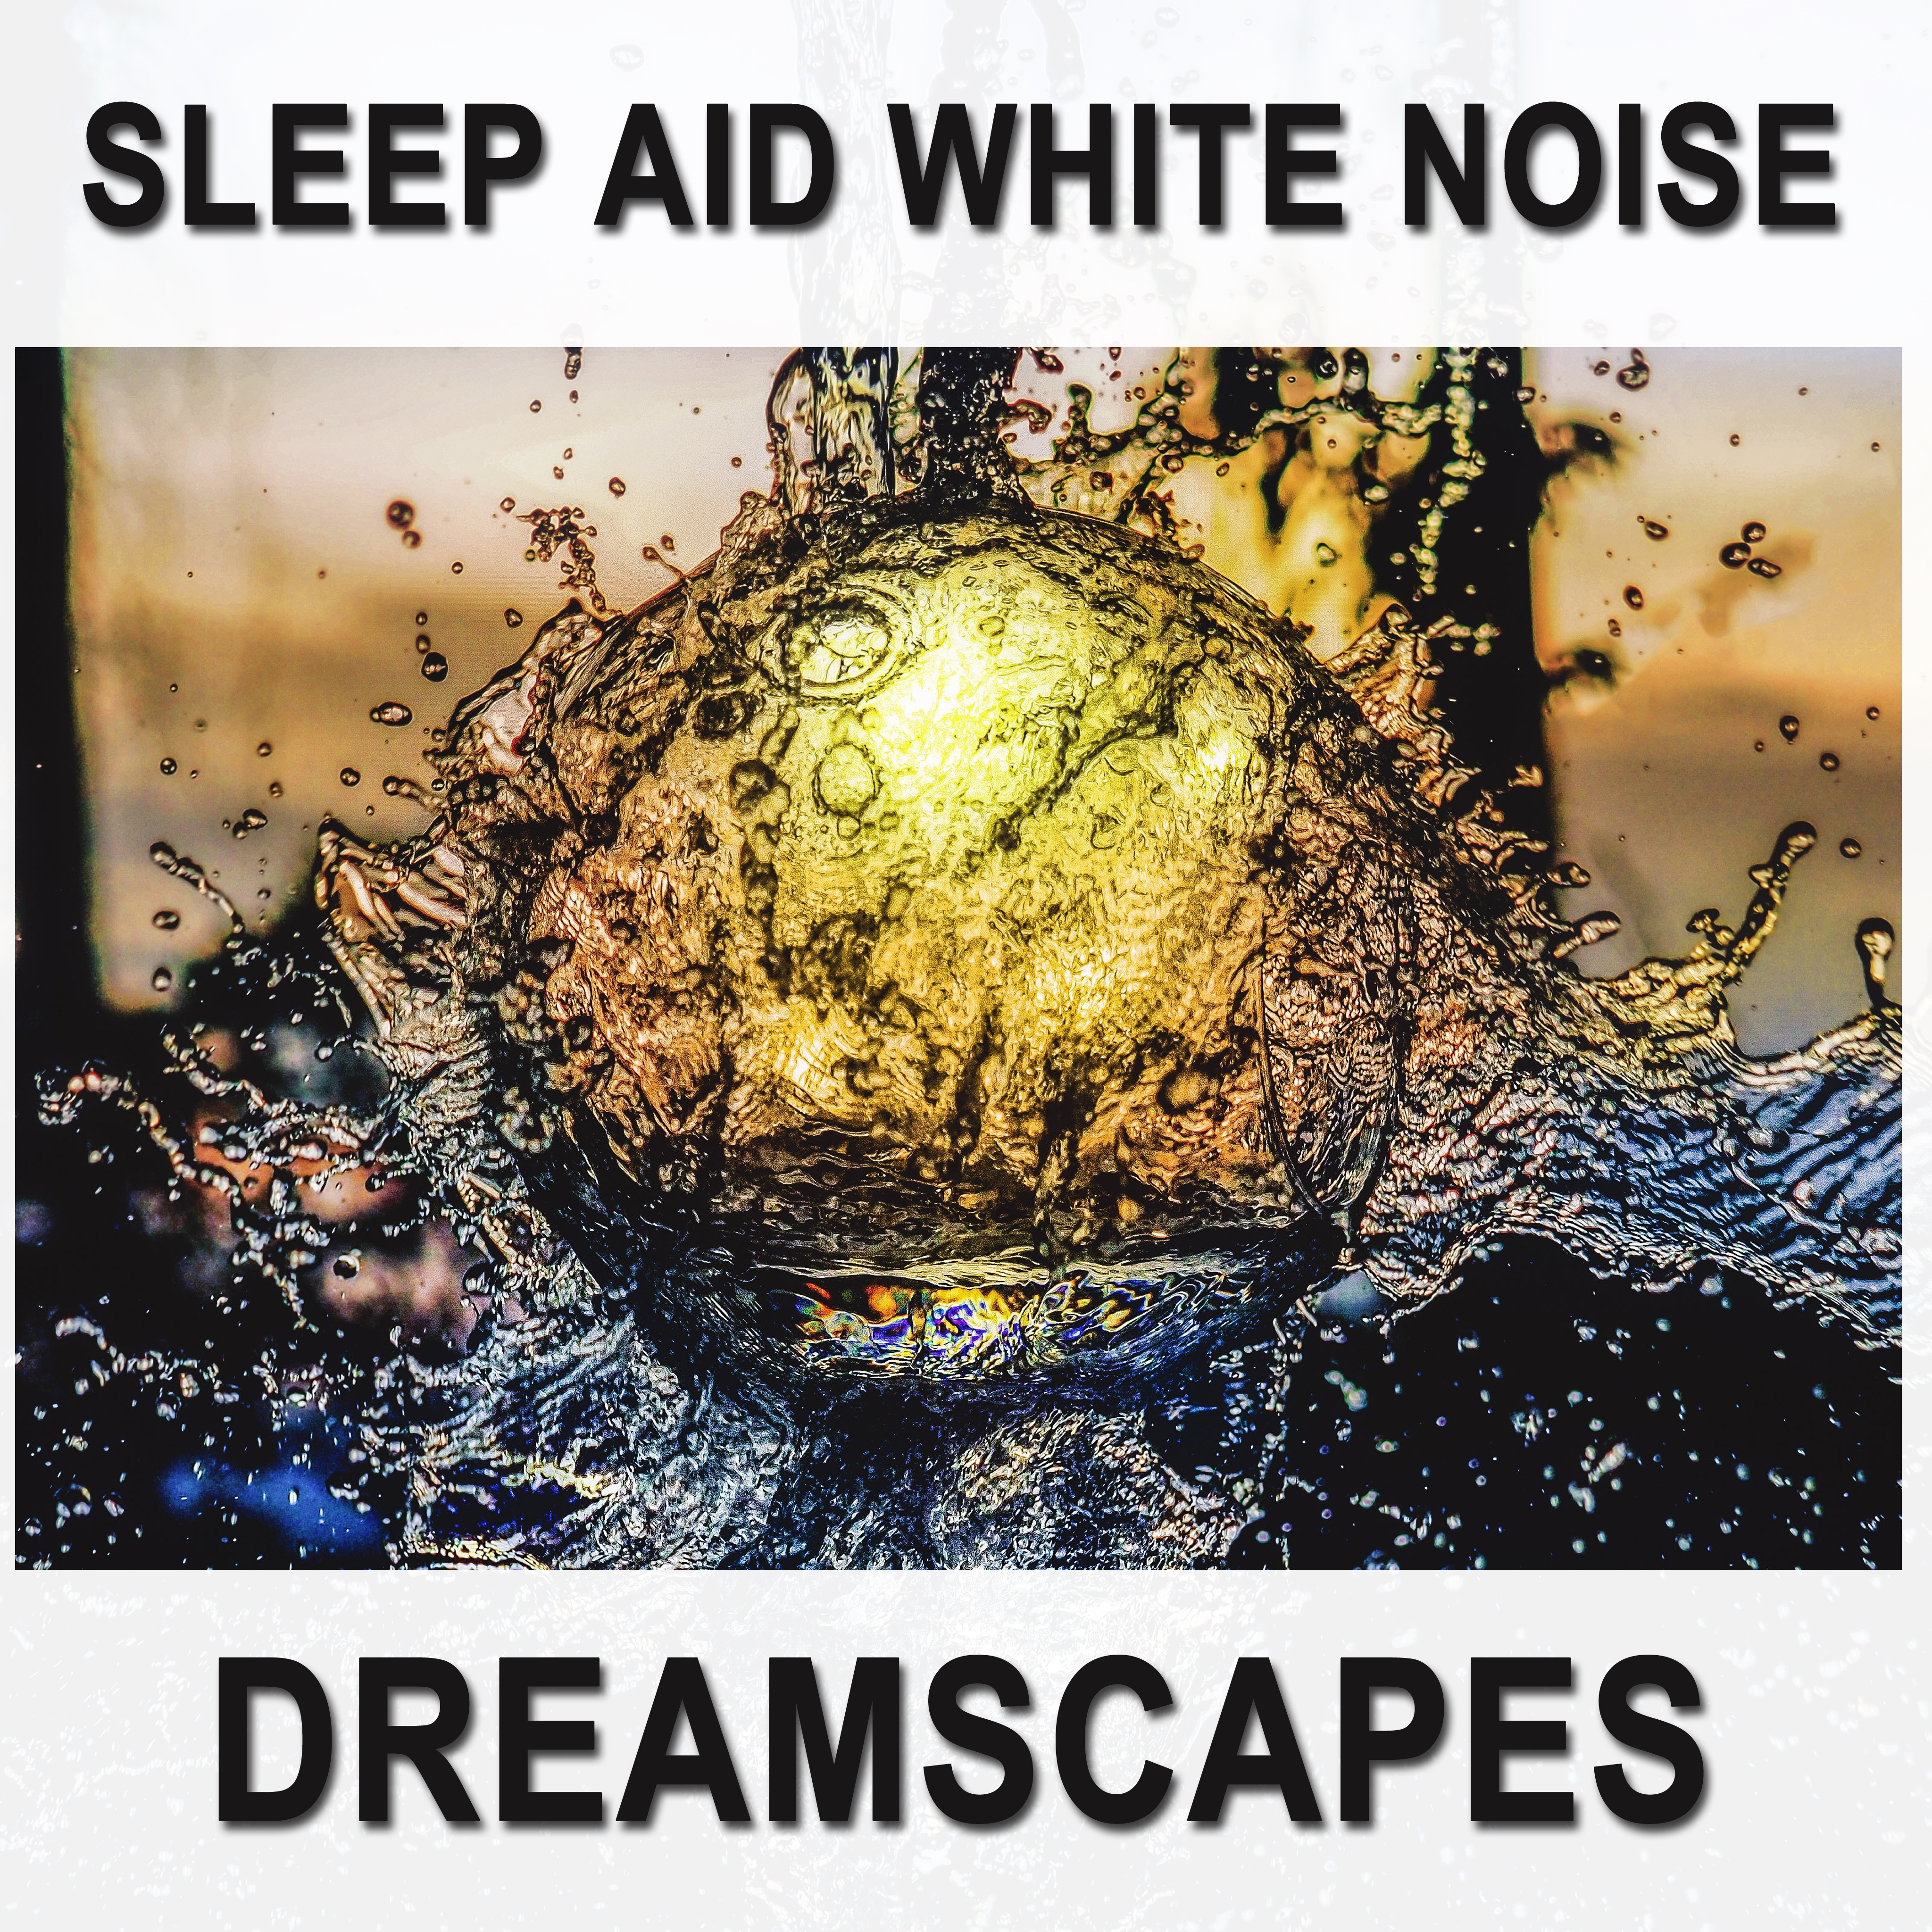 15 Sleep Aid White Noise Dreamscapes